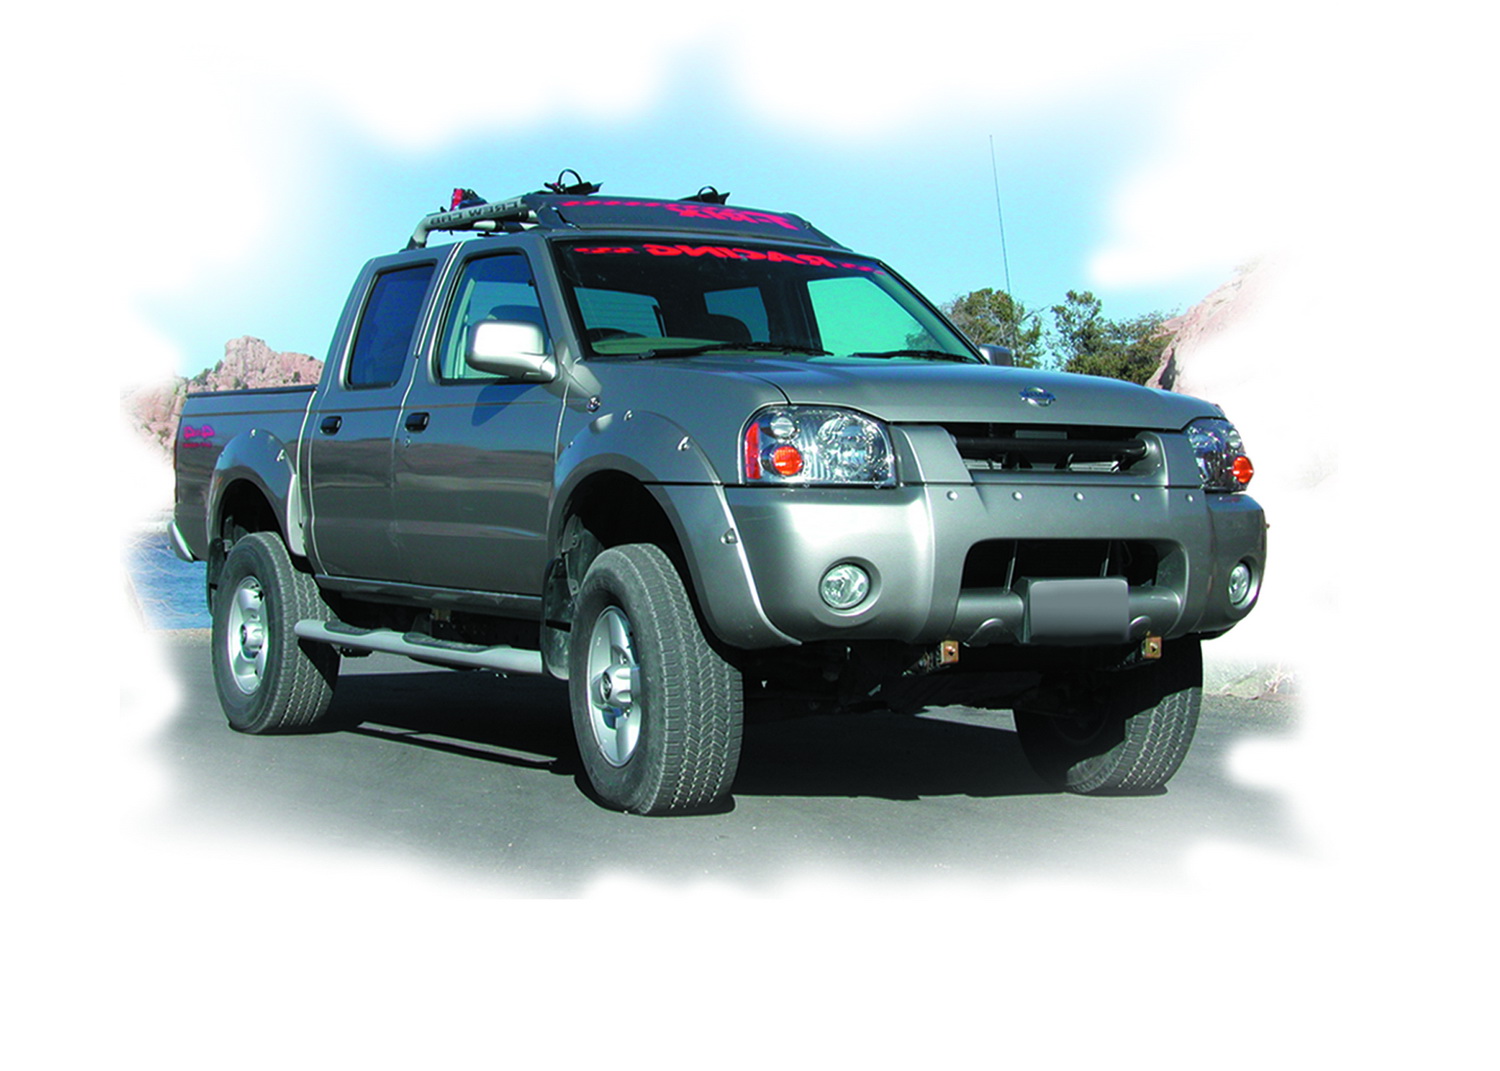 2005 Nissan frontier body lift kit #2